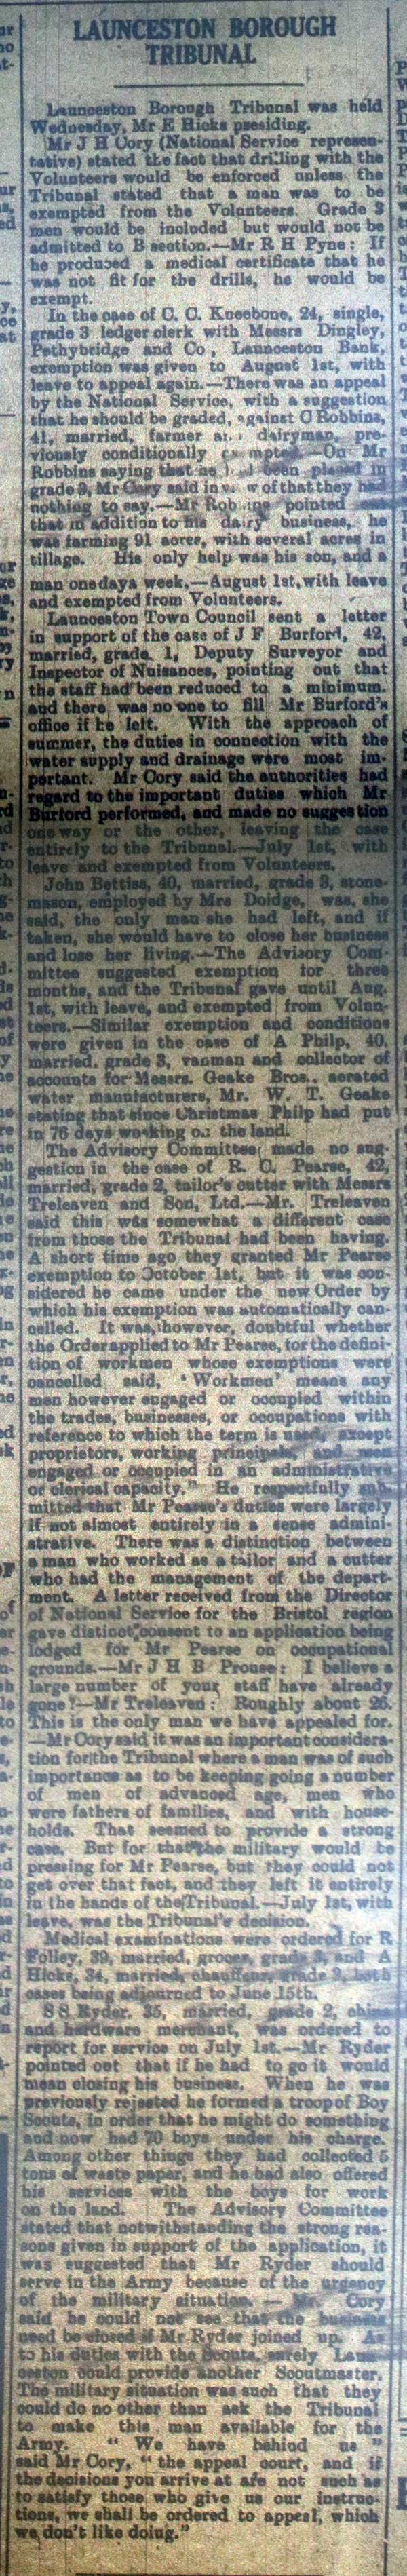 Launceston Tribunal, May 11th, 1918